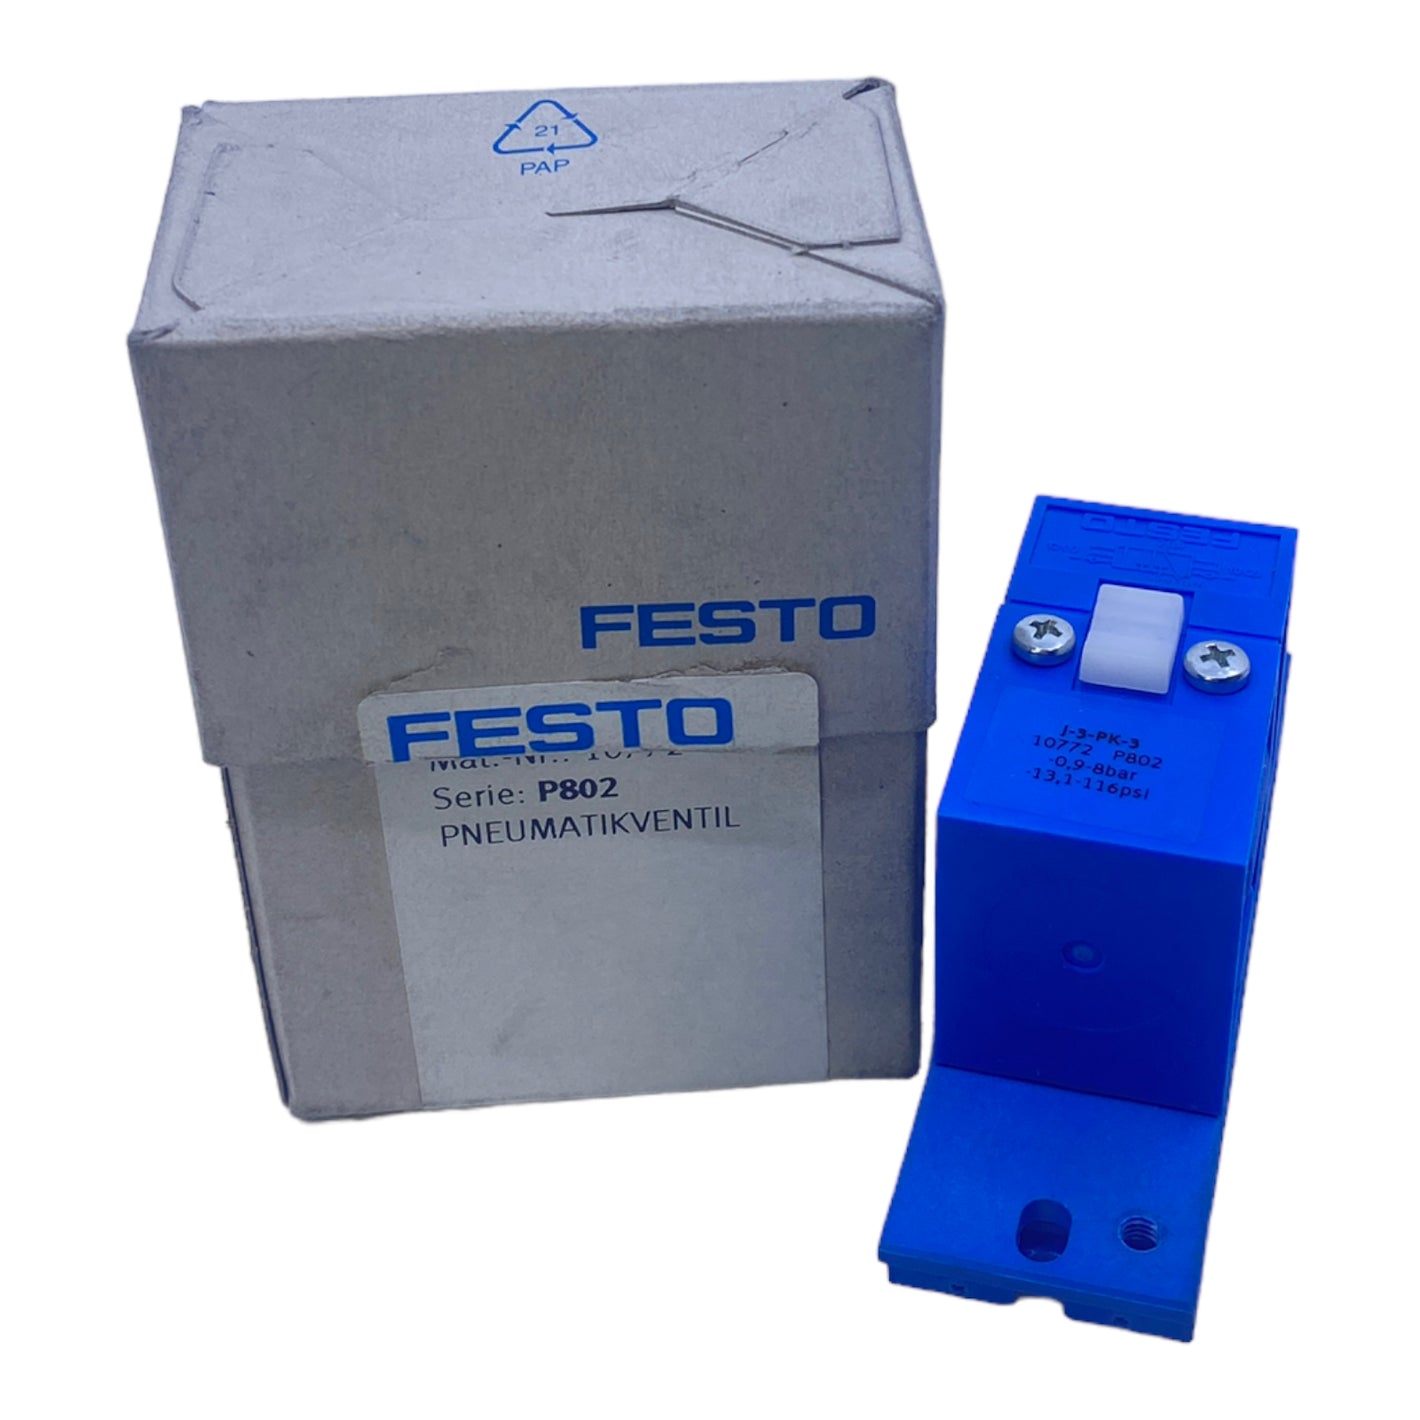 Festo J-3-PK-3 10772 Pneumatikventil Ventil Pneumatik 3/2 bistabil